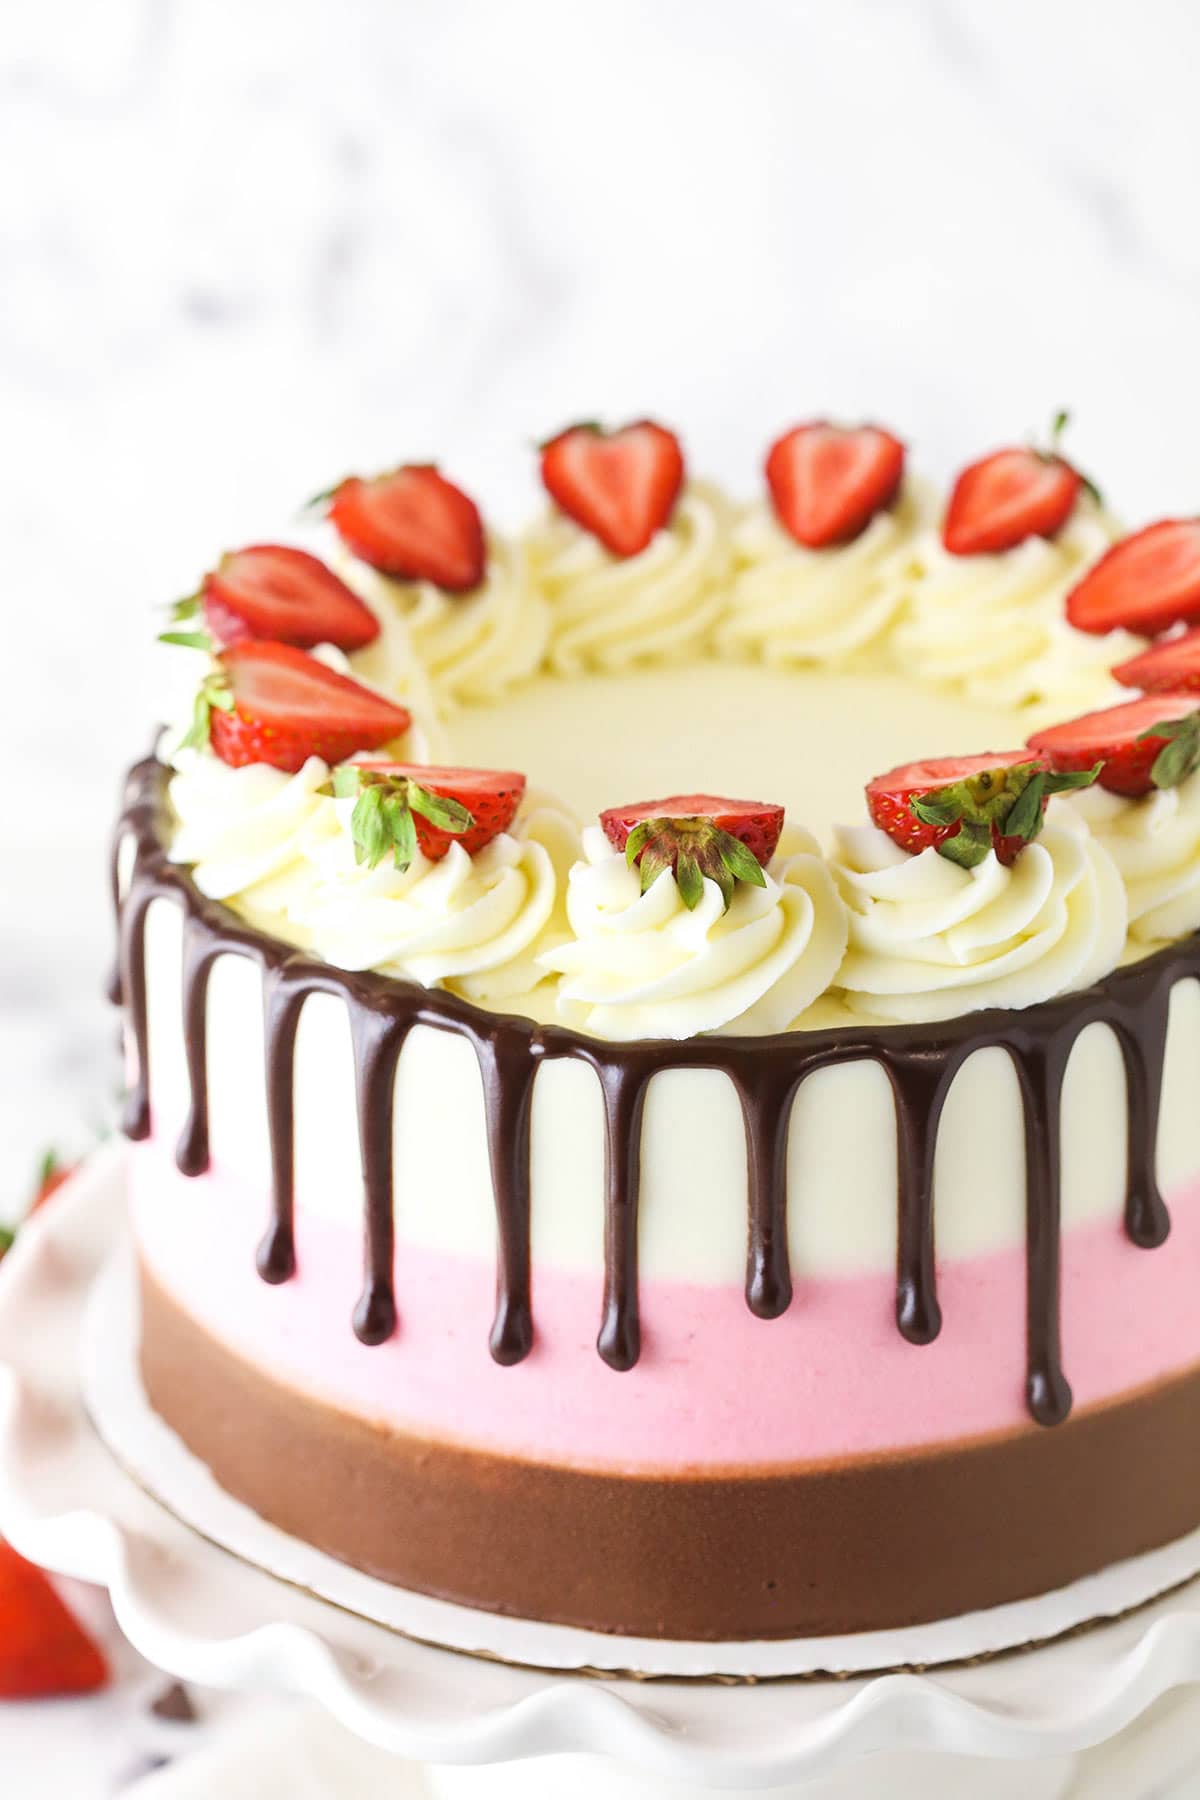 A neapolitan cake decorated with vanilla buttercream swirls, strawberry slices and drips of chocolate ganache